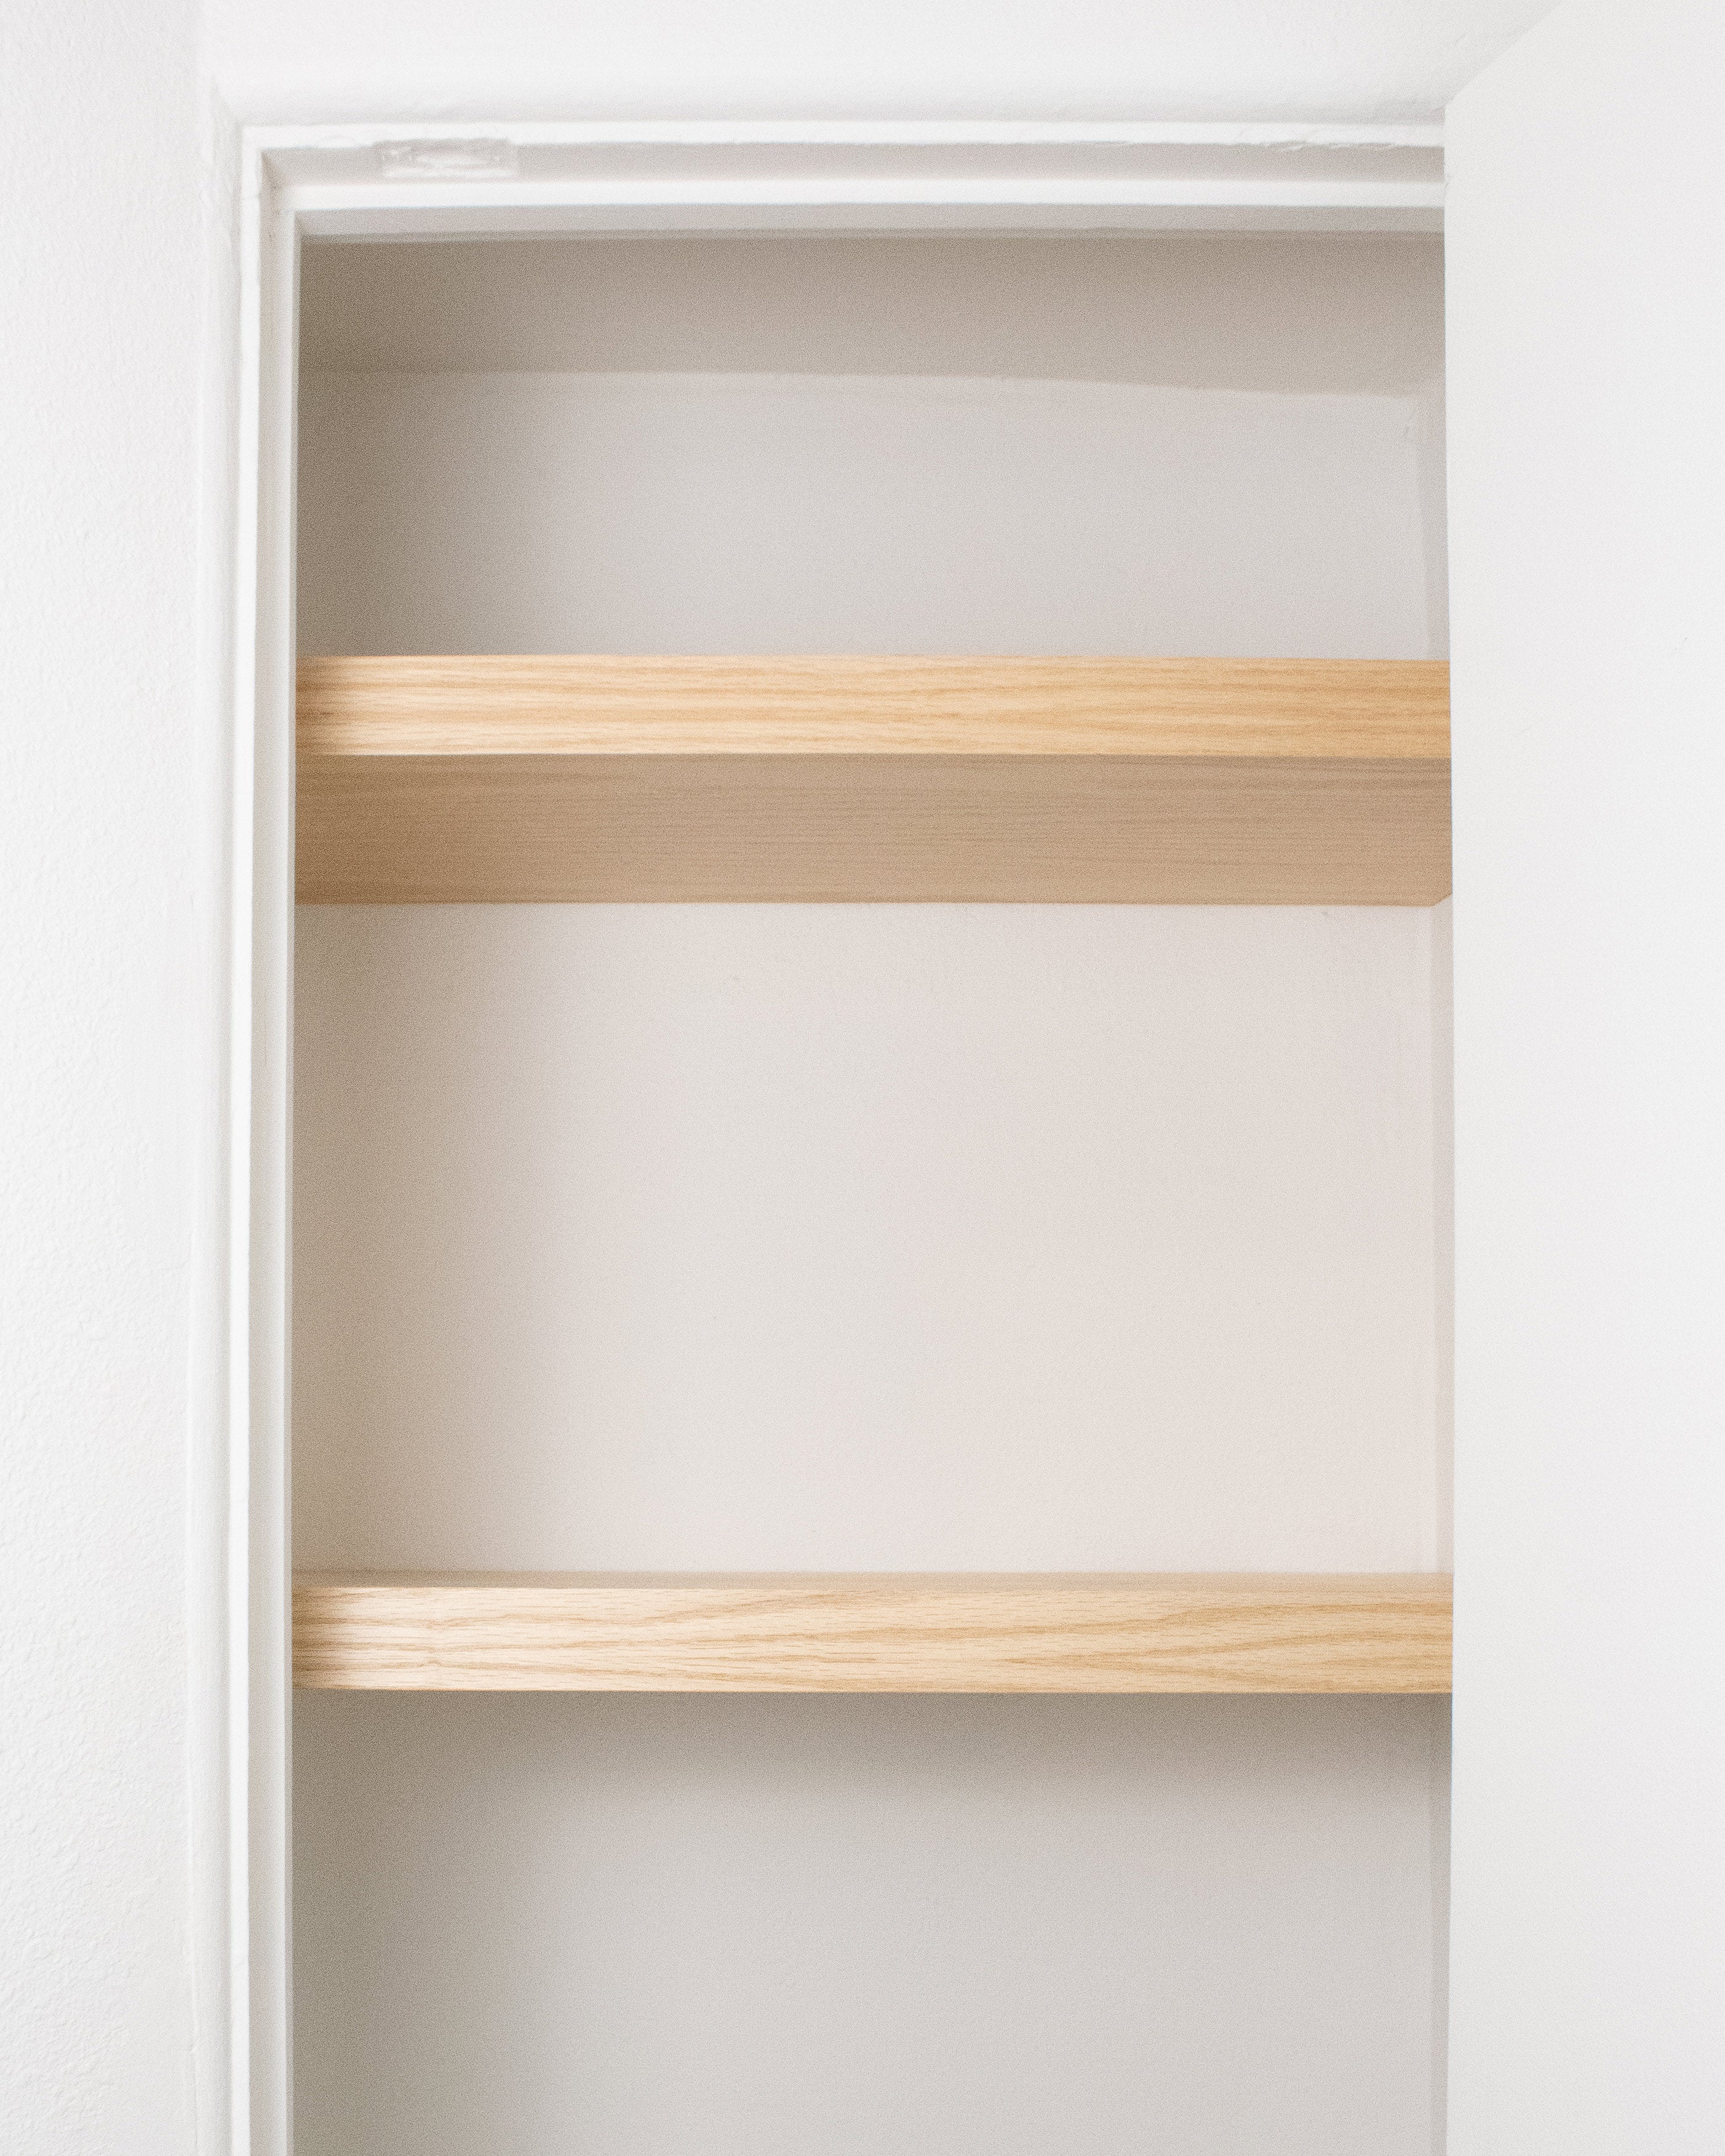 Driftwood Grey Oak 2-4" thick Cabinet Top / Slab Shelf